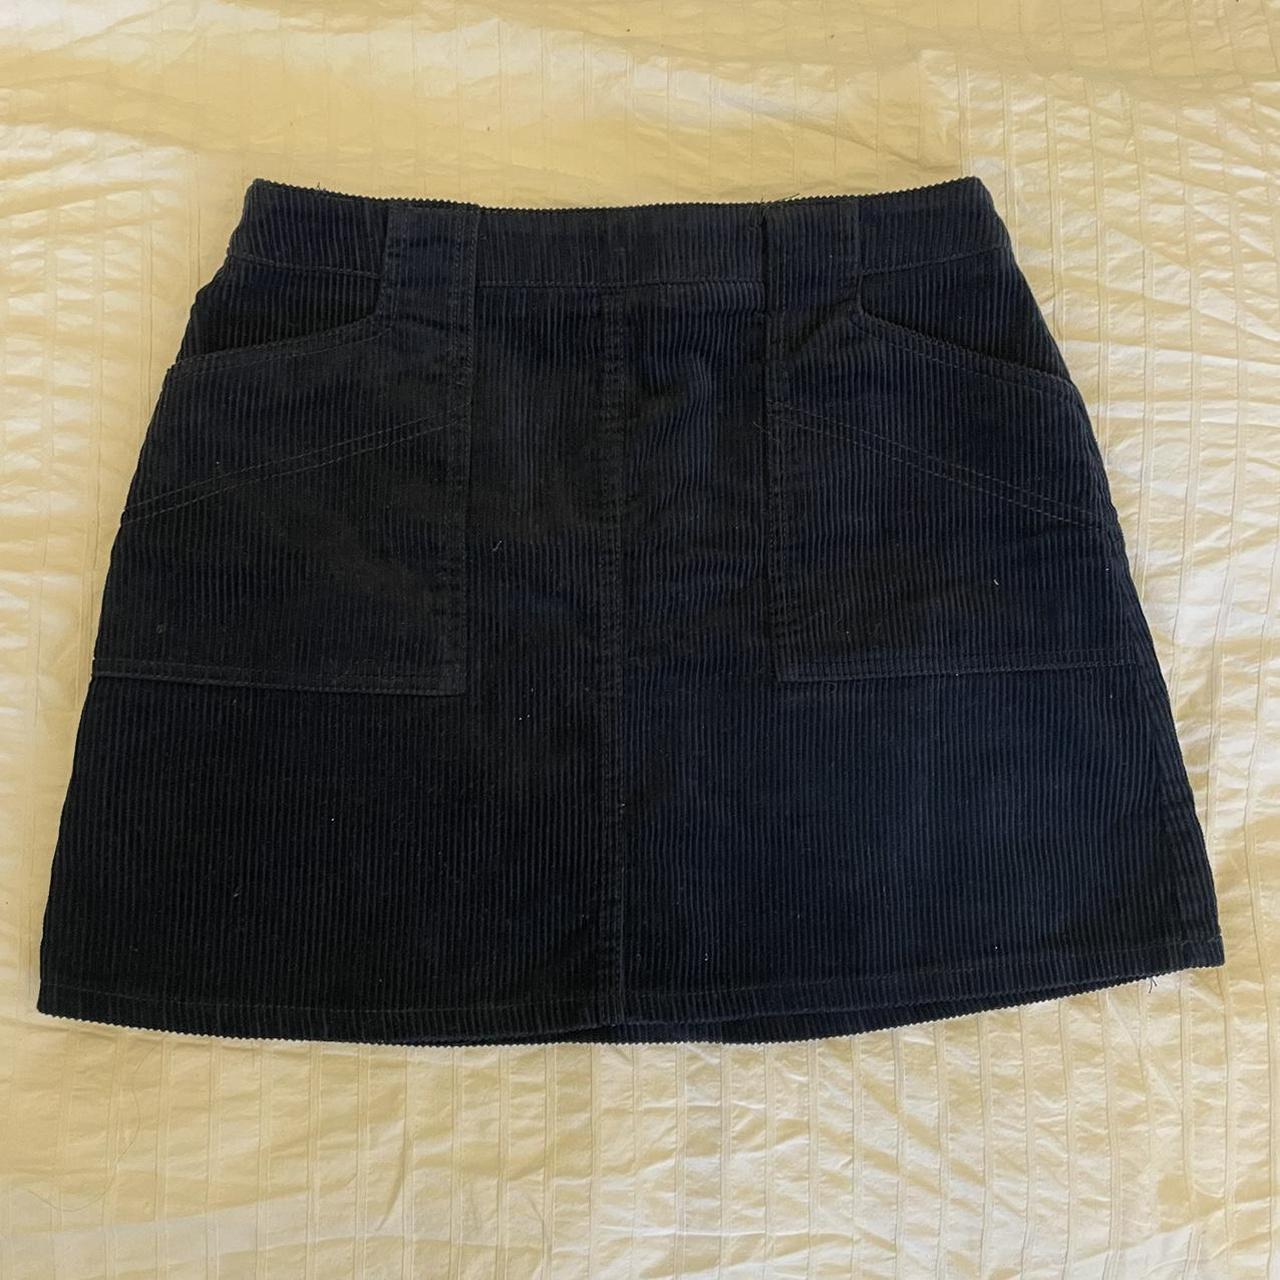 UO navy corduroy mini skirt Size S Worn a few... - Depop